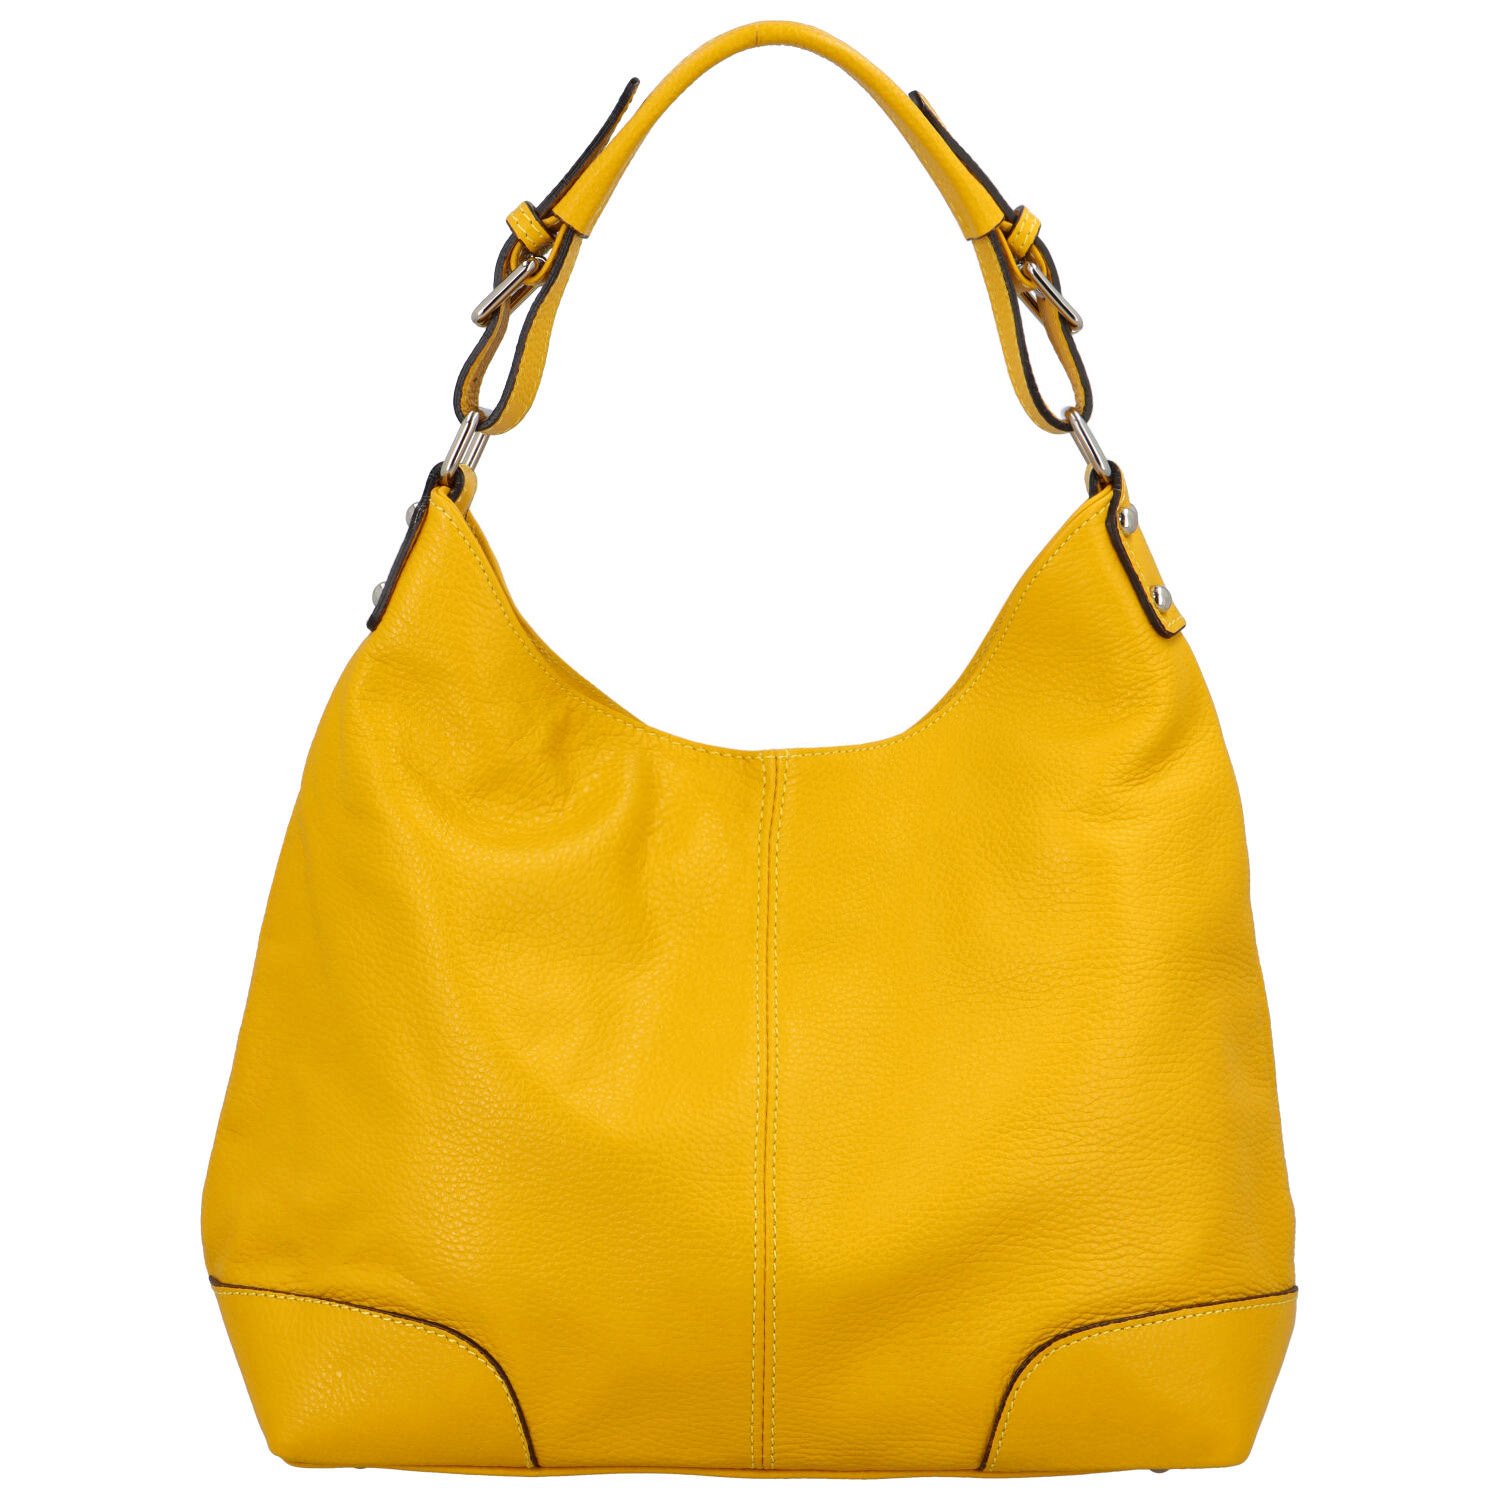 Dámska kožená kabelka žltá - ItalY Inpelle